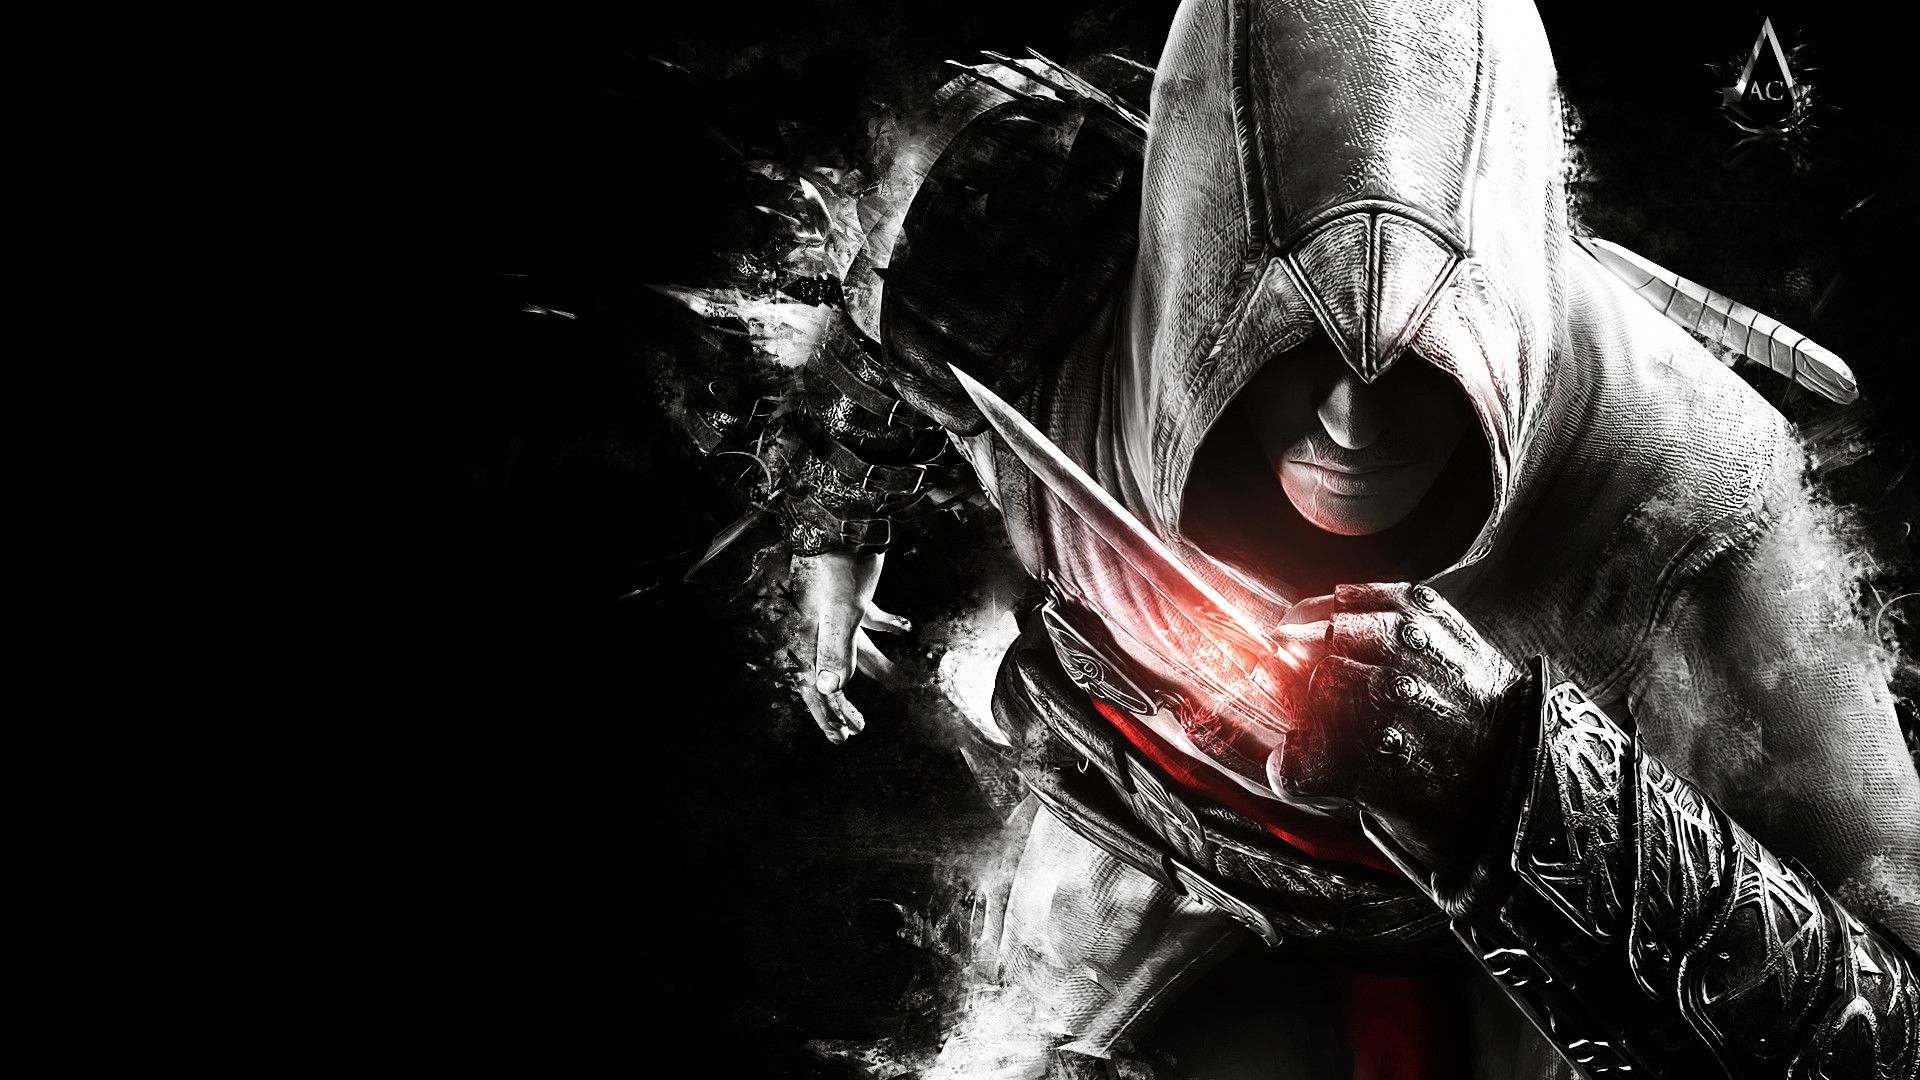 Assassins Creed HD Wallpapers - Wallpaper Cave